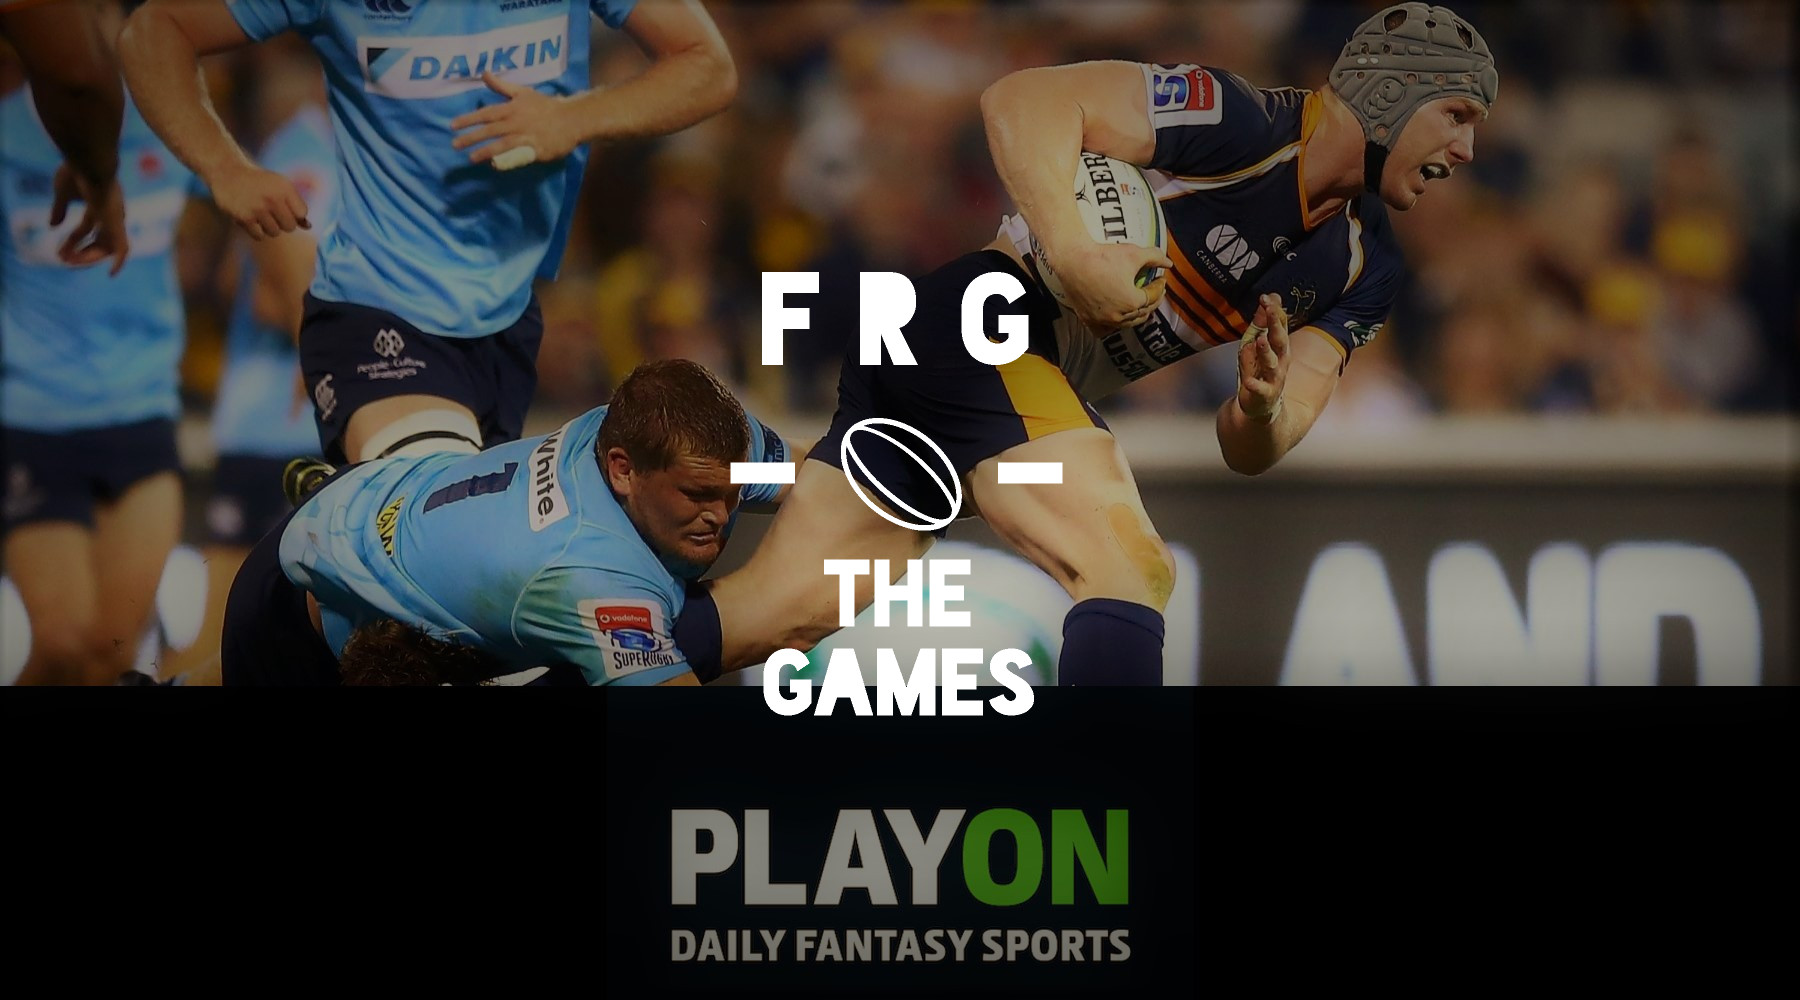 FRG Daily Fantasy Rugby Game Reviews - PlayOn